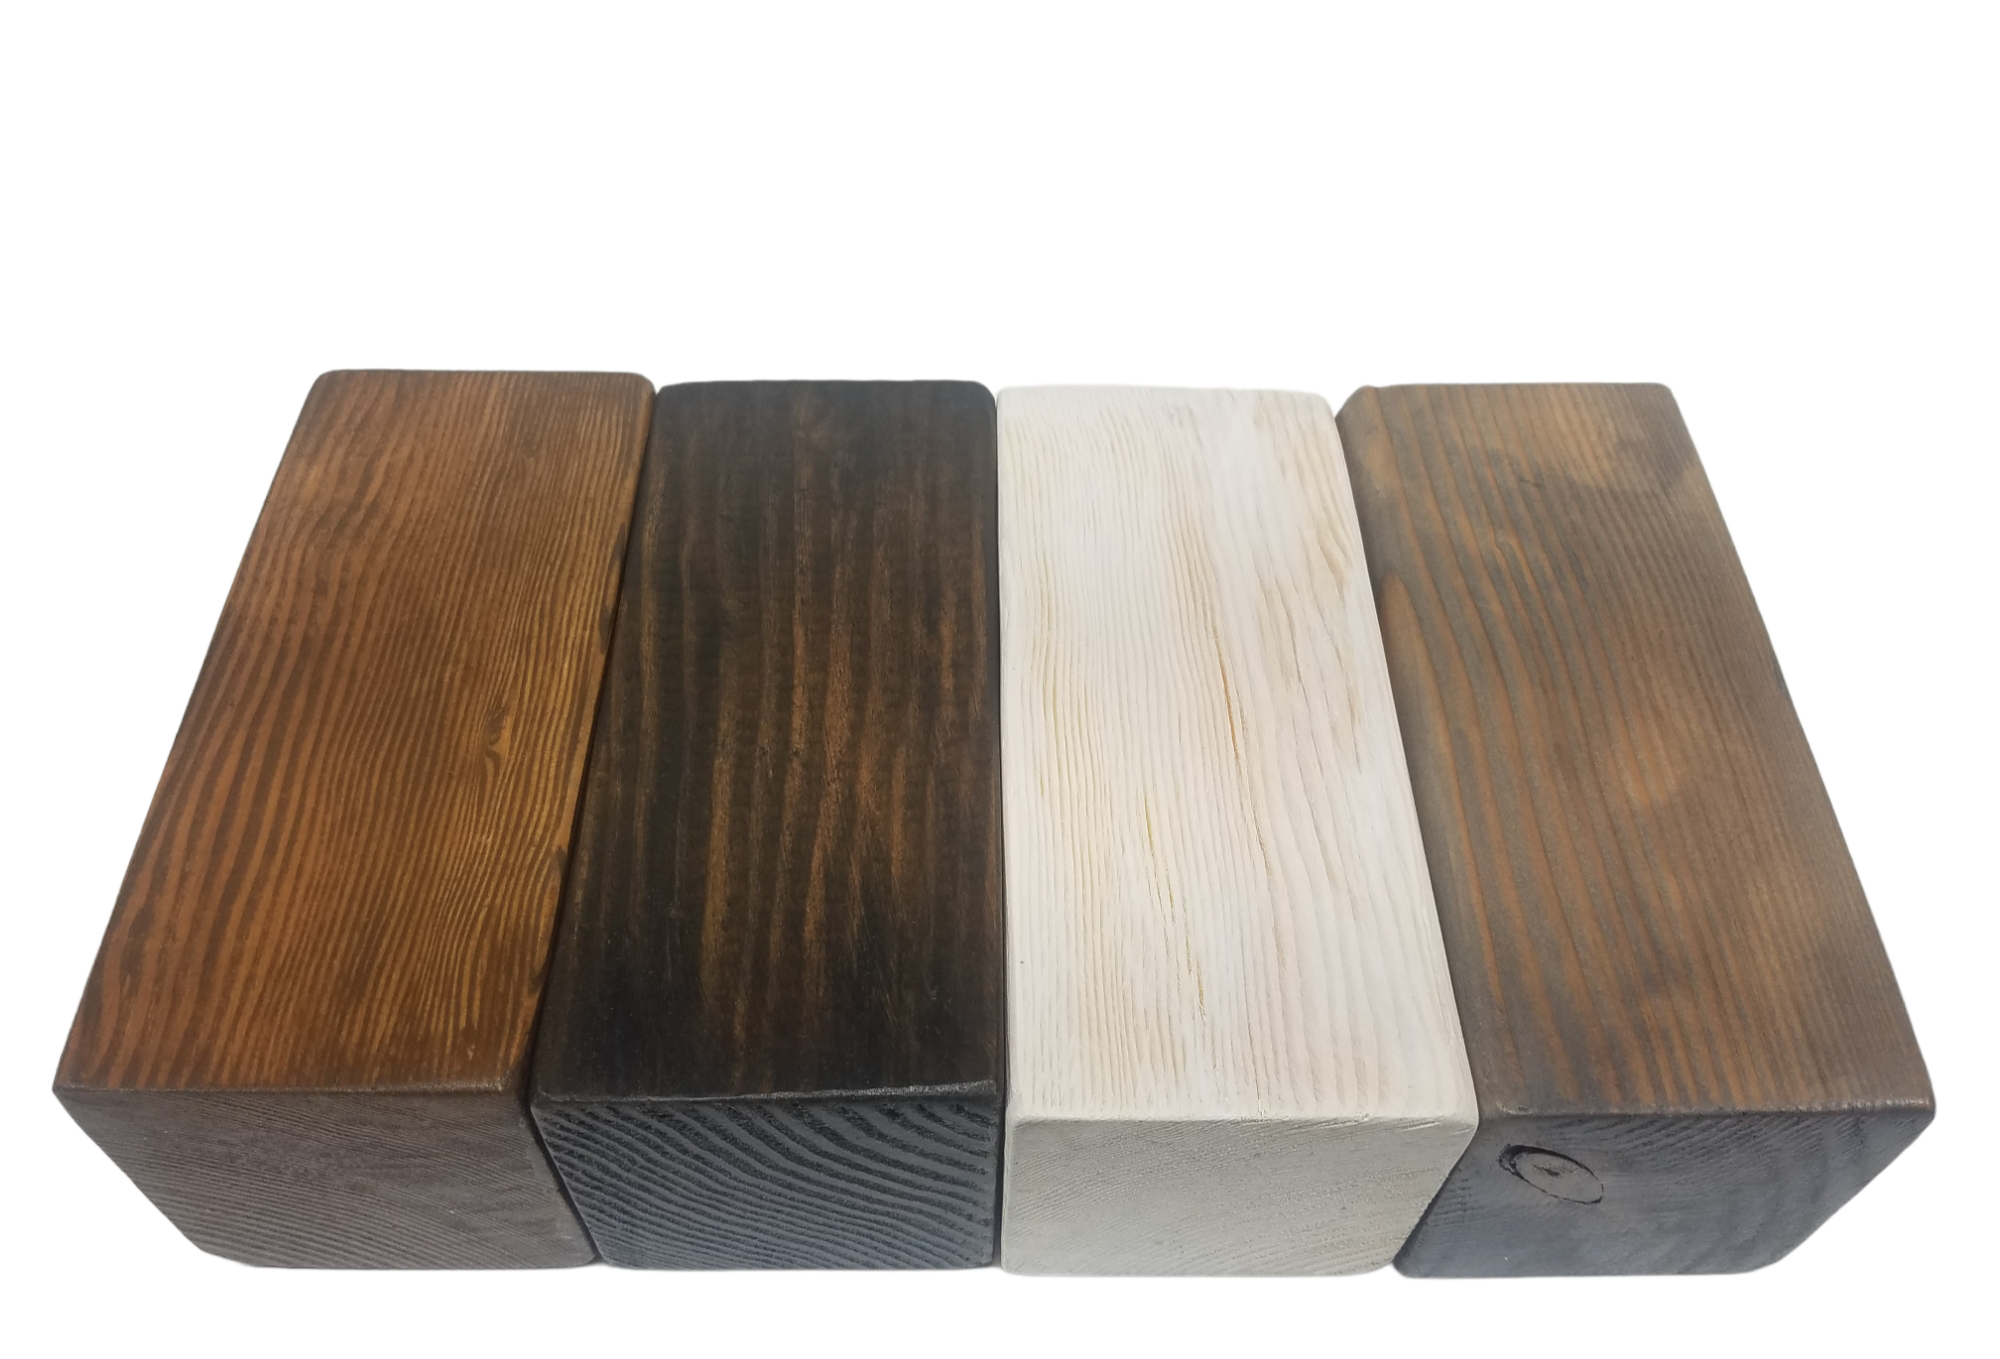 Wood Block Risers- Decor Risers- Black- Walnut- Whitewash- Gray- Plant Risers- Set of 3- Solid Wooden Blocks-Photo Displays- Rustic- Modern